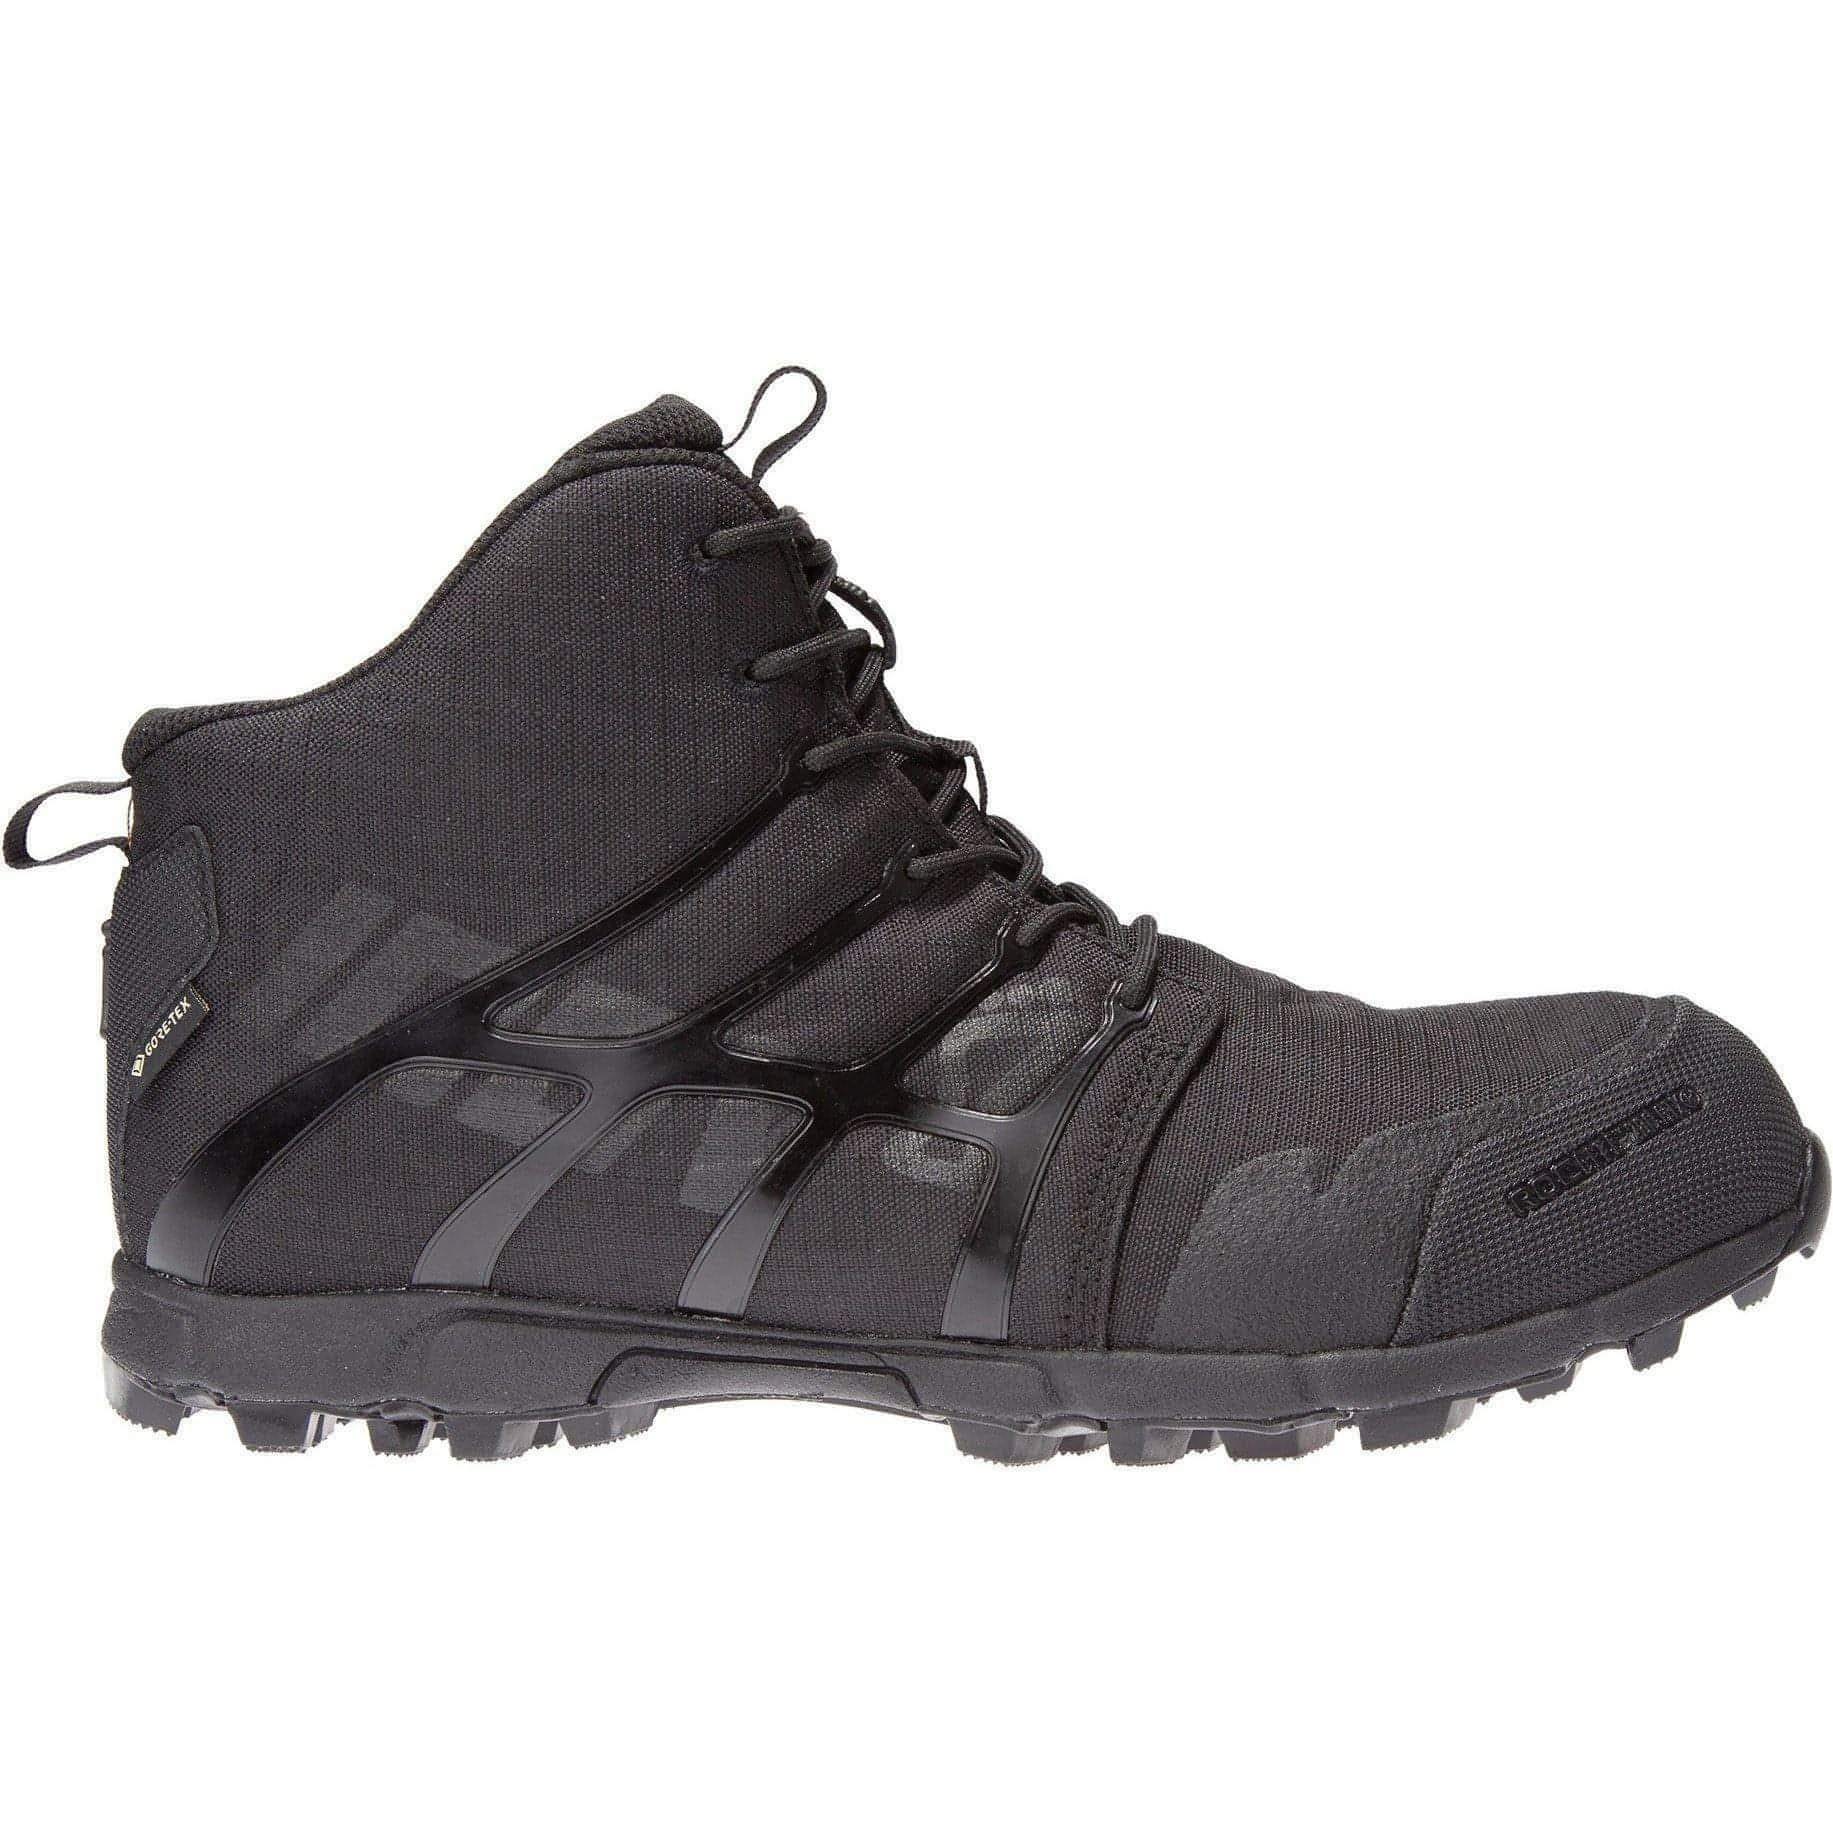 Inov8 Roclite G 286 GTX Mens Walking Boots - Black - Start Fitness